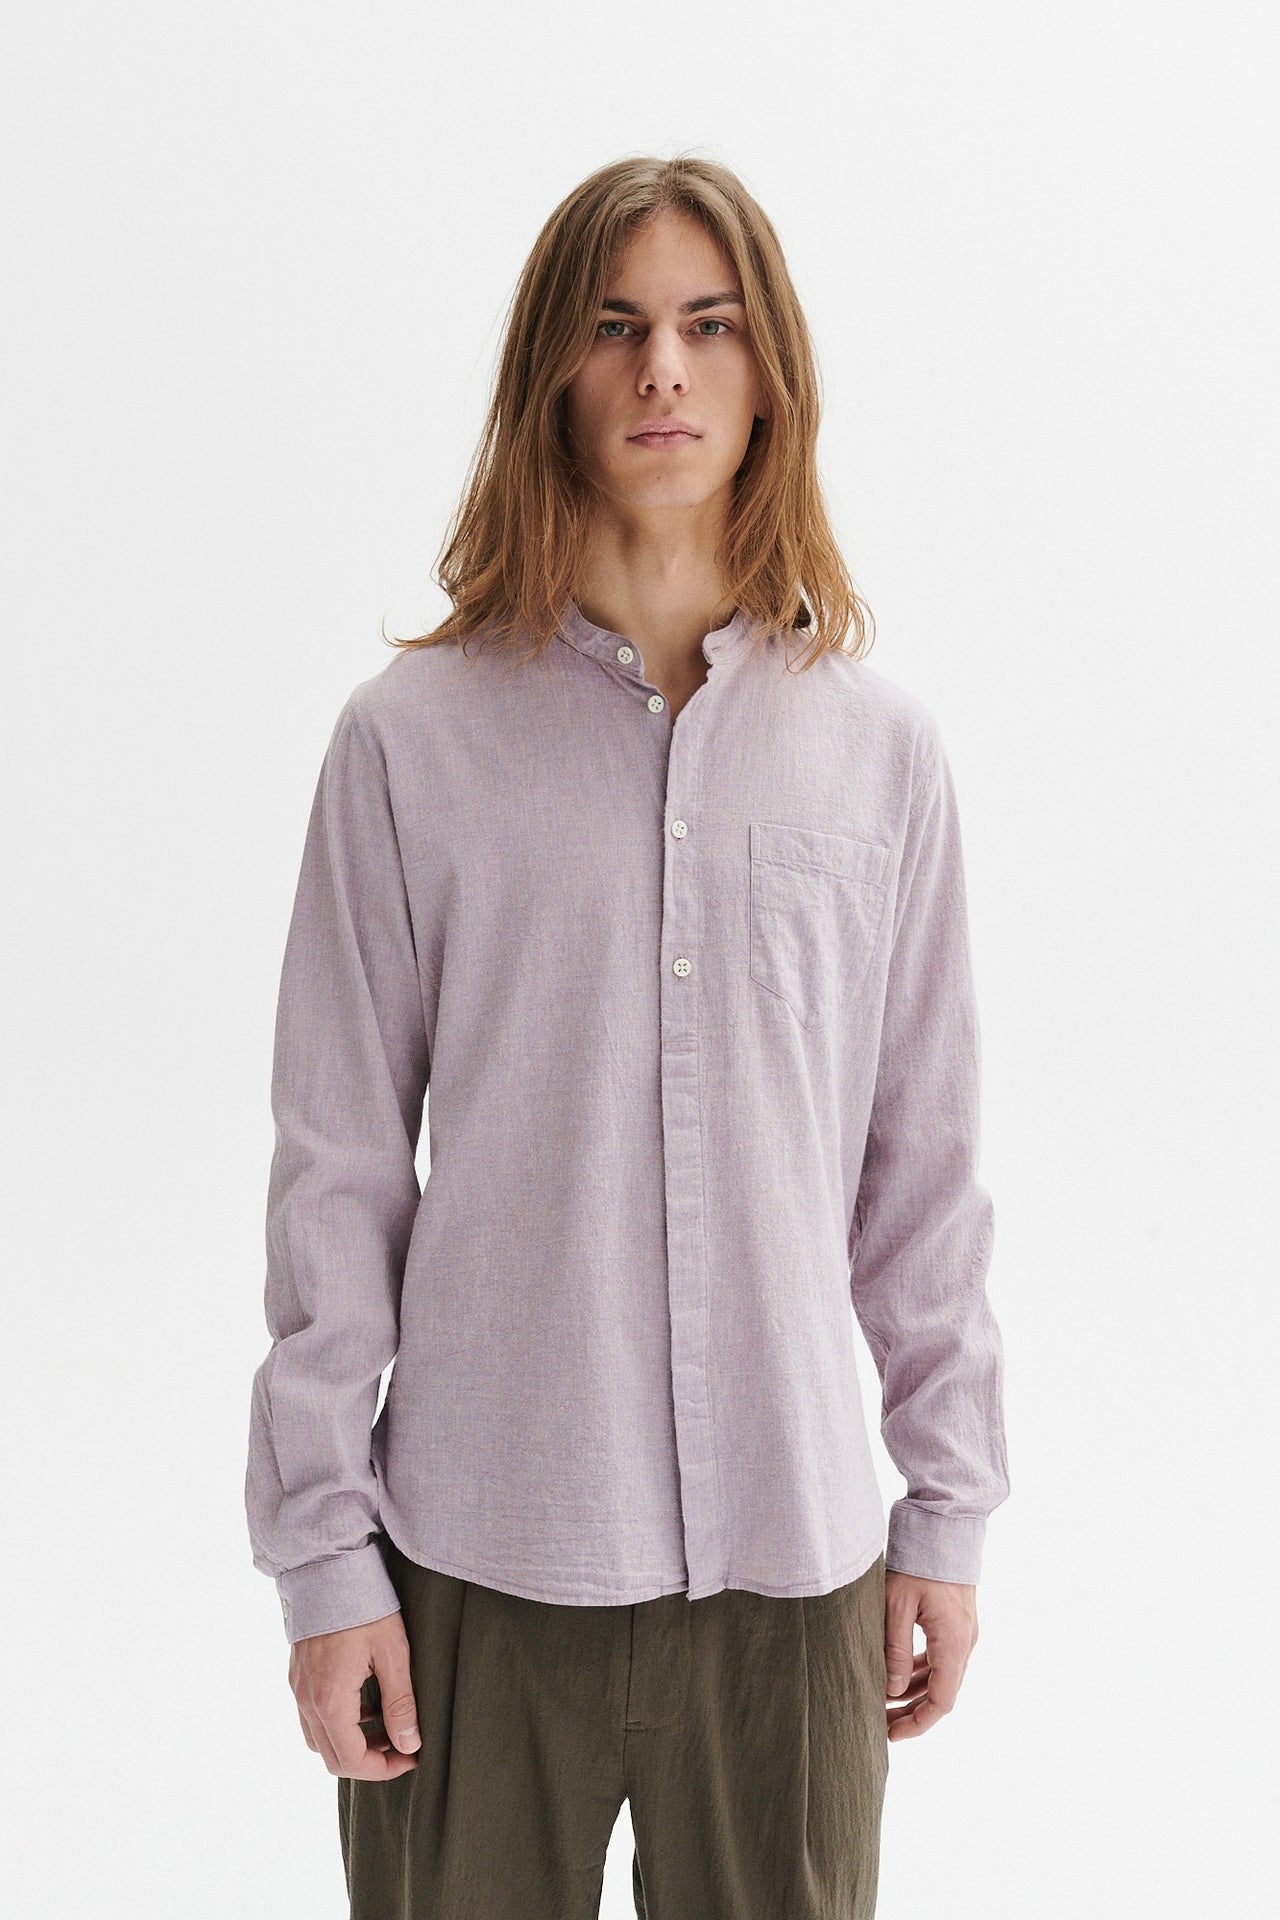 Zen Shirt in a Purple Heather Japanese Organic Cotton and Linen